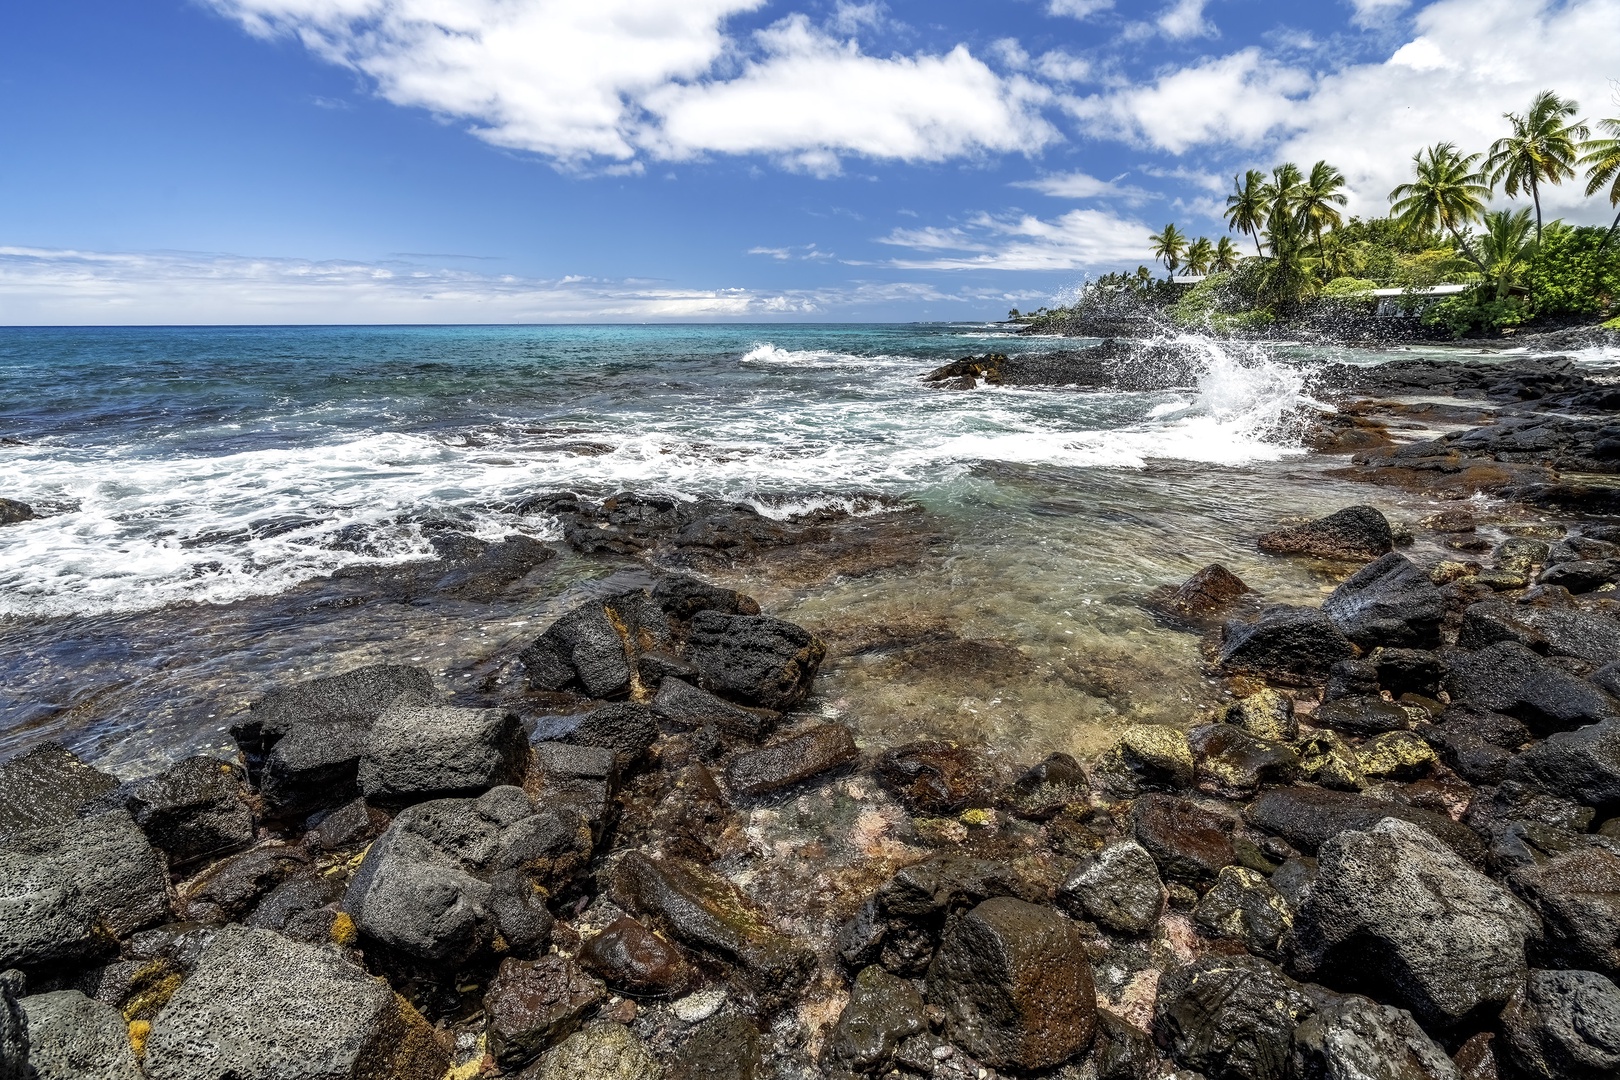 Kailua Kona Vacation Rentals, Lymans Bay Hale - Lymans Bay shoreline access